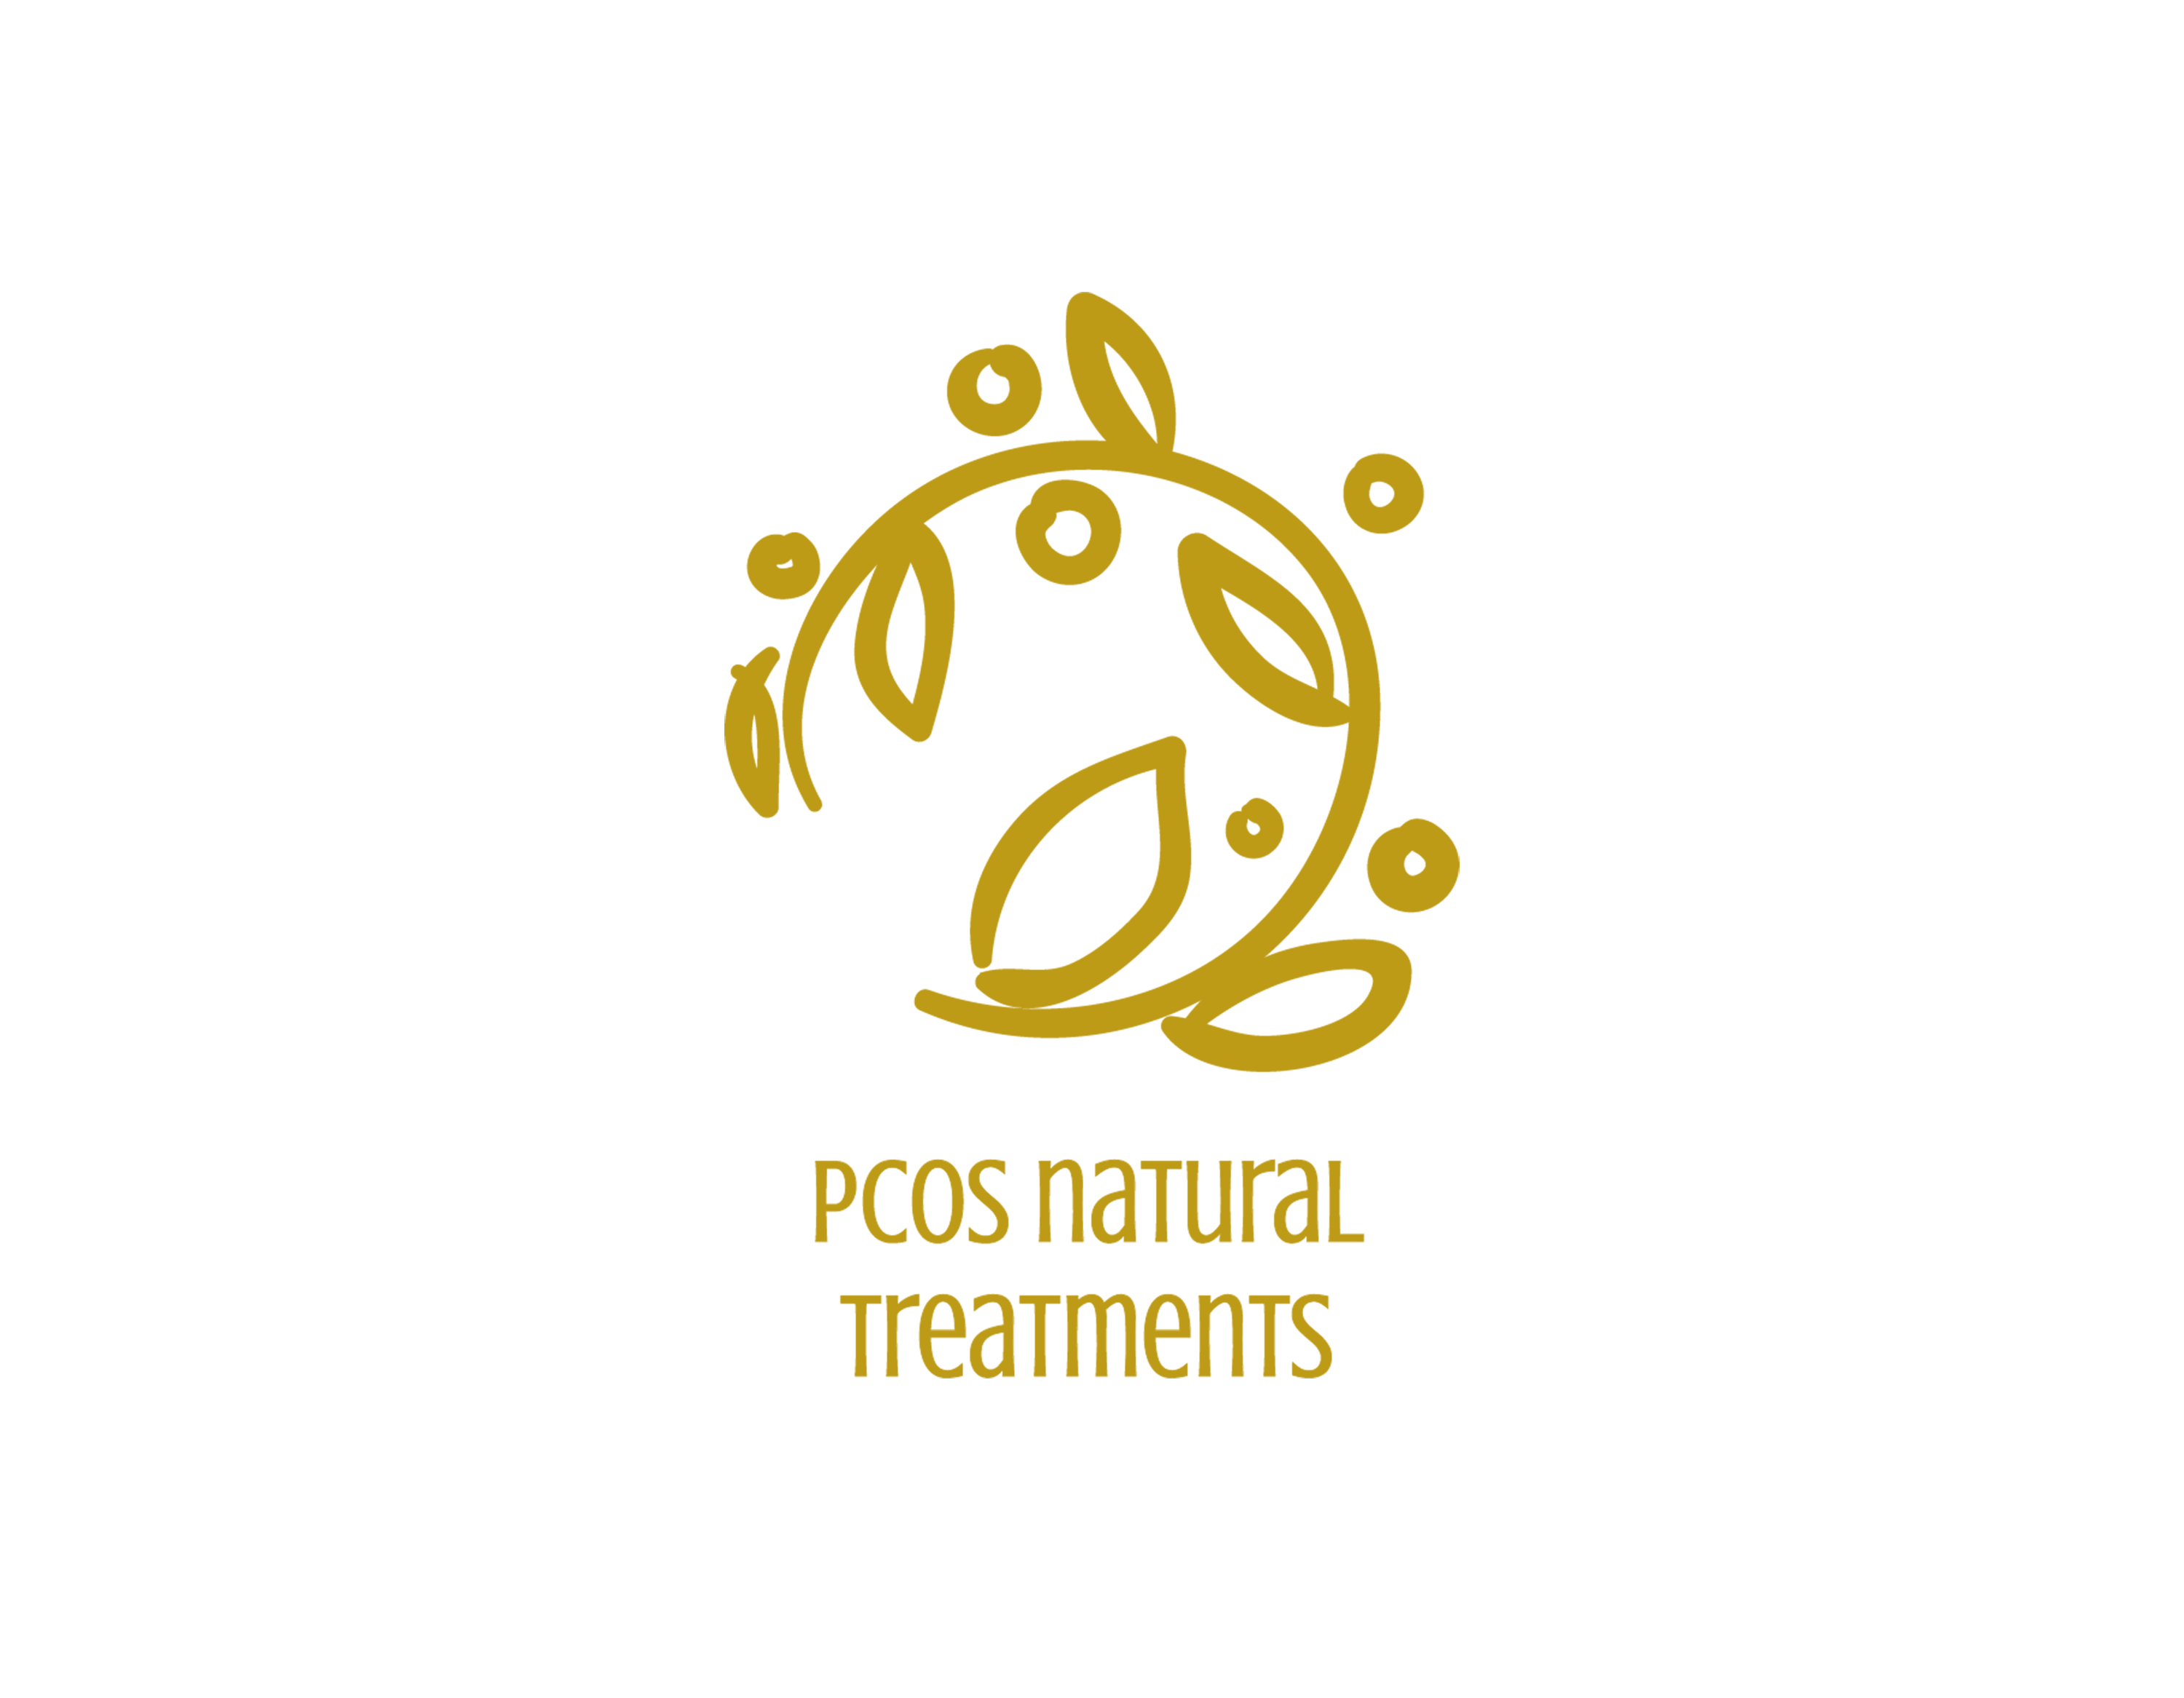 pcos natural treatments logo